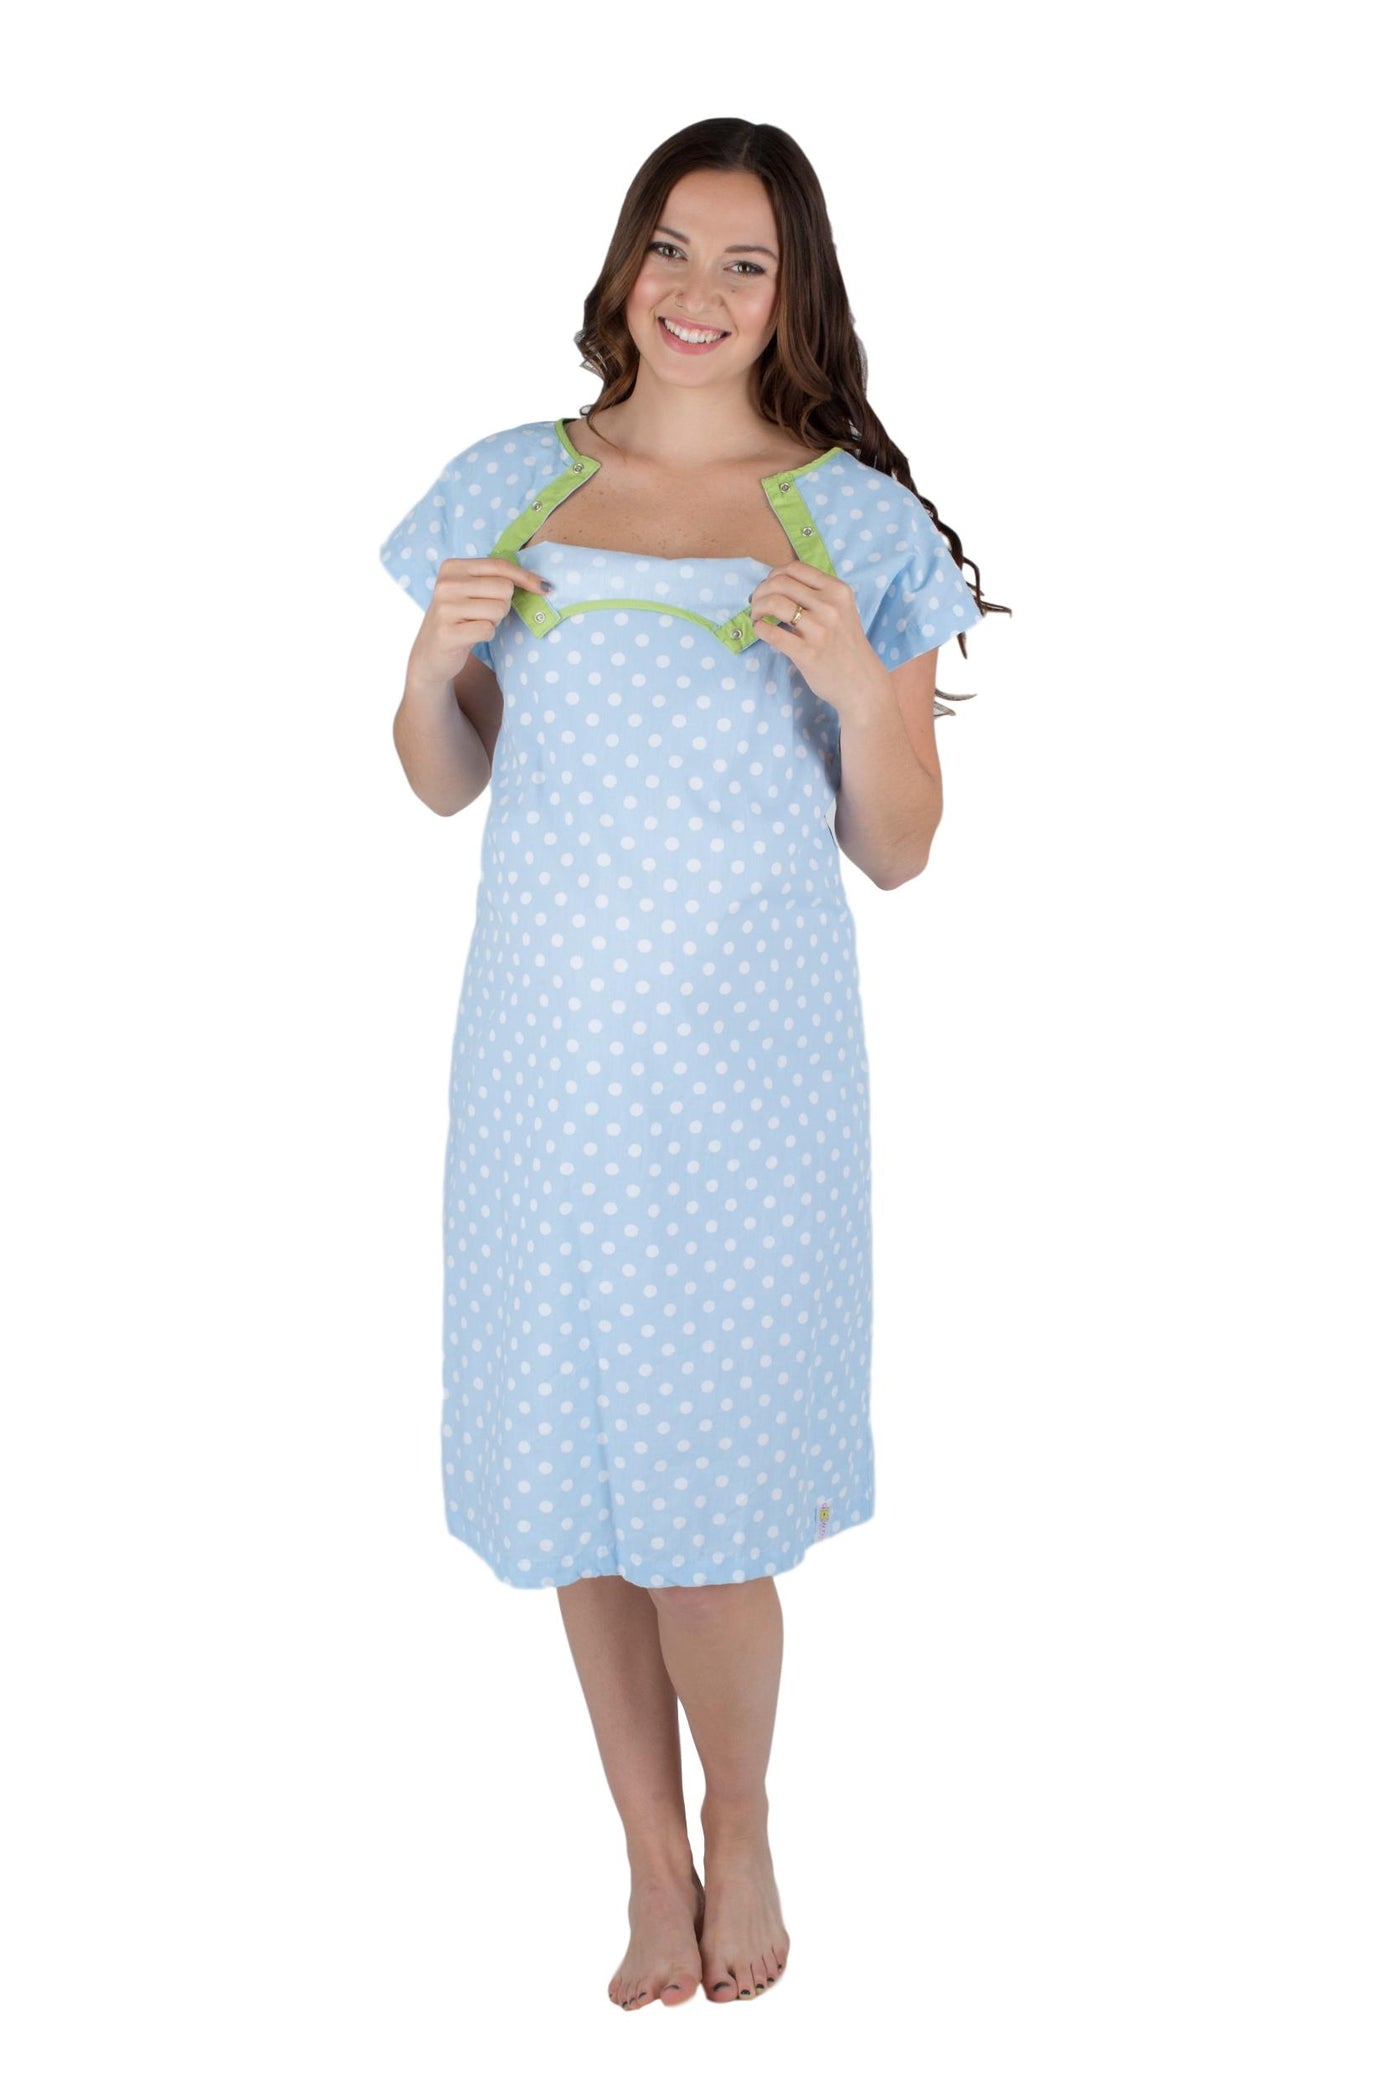 Nicole Patient Hospital Gown